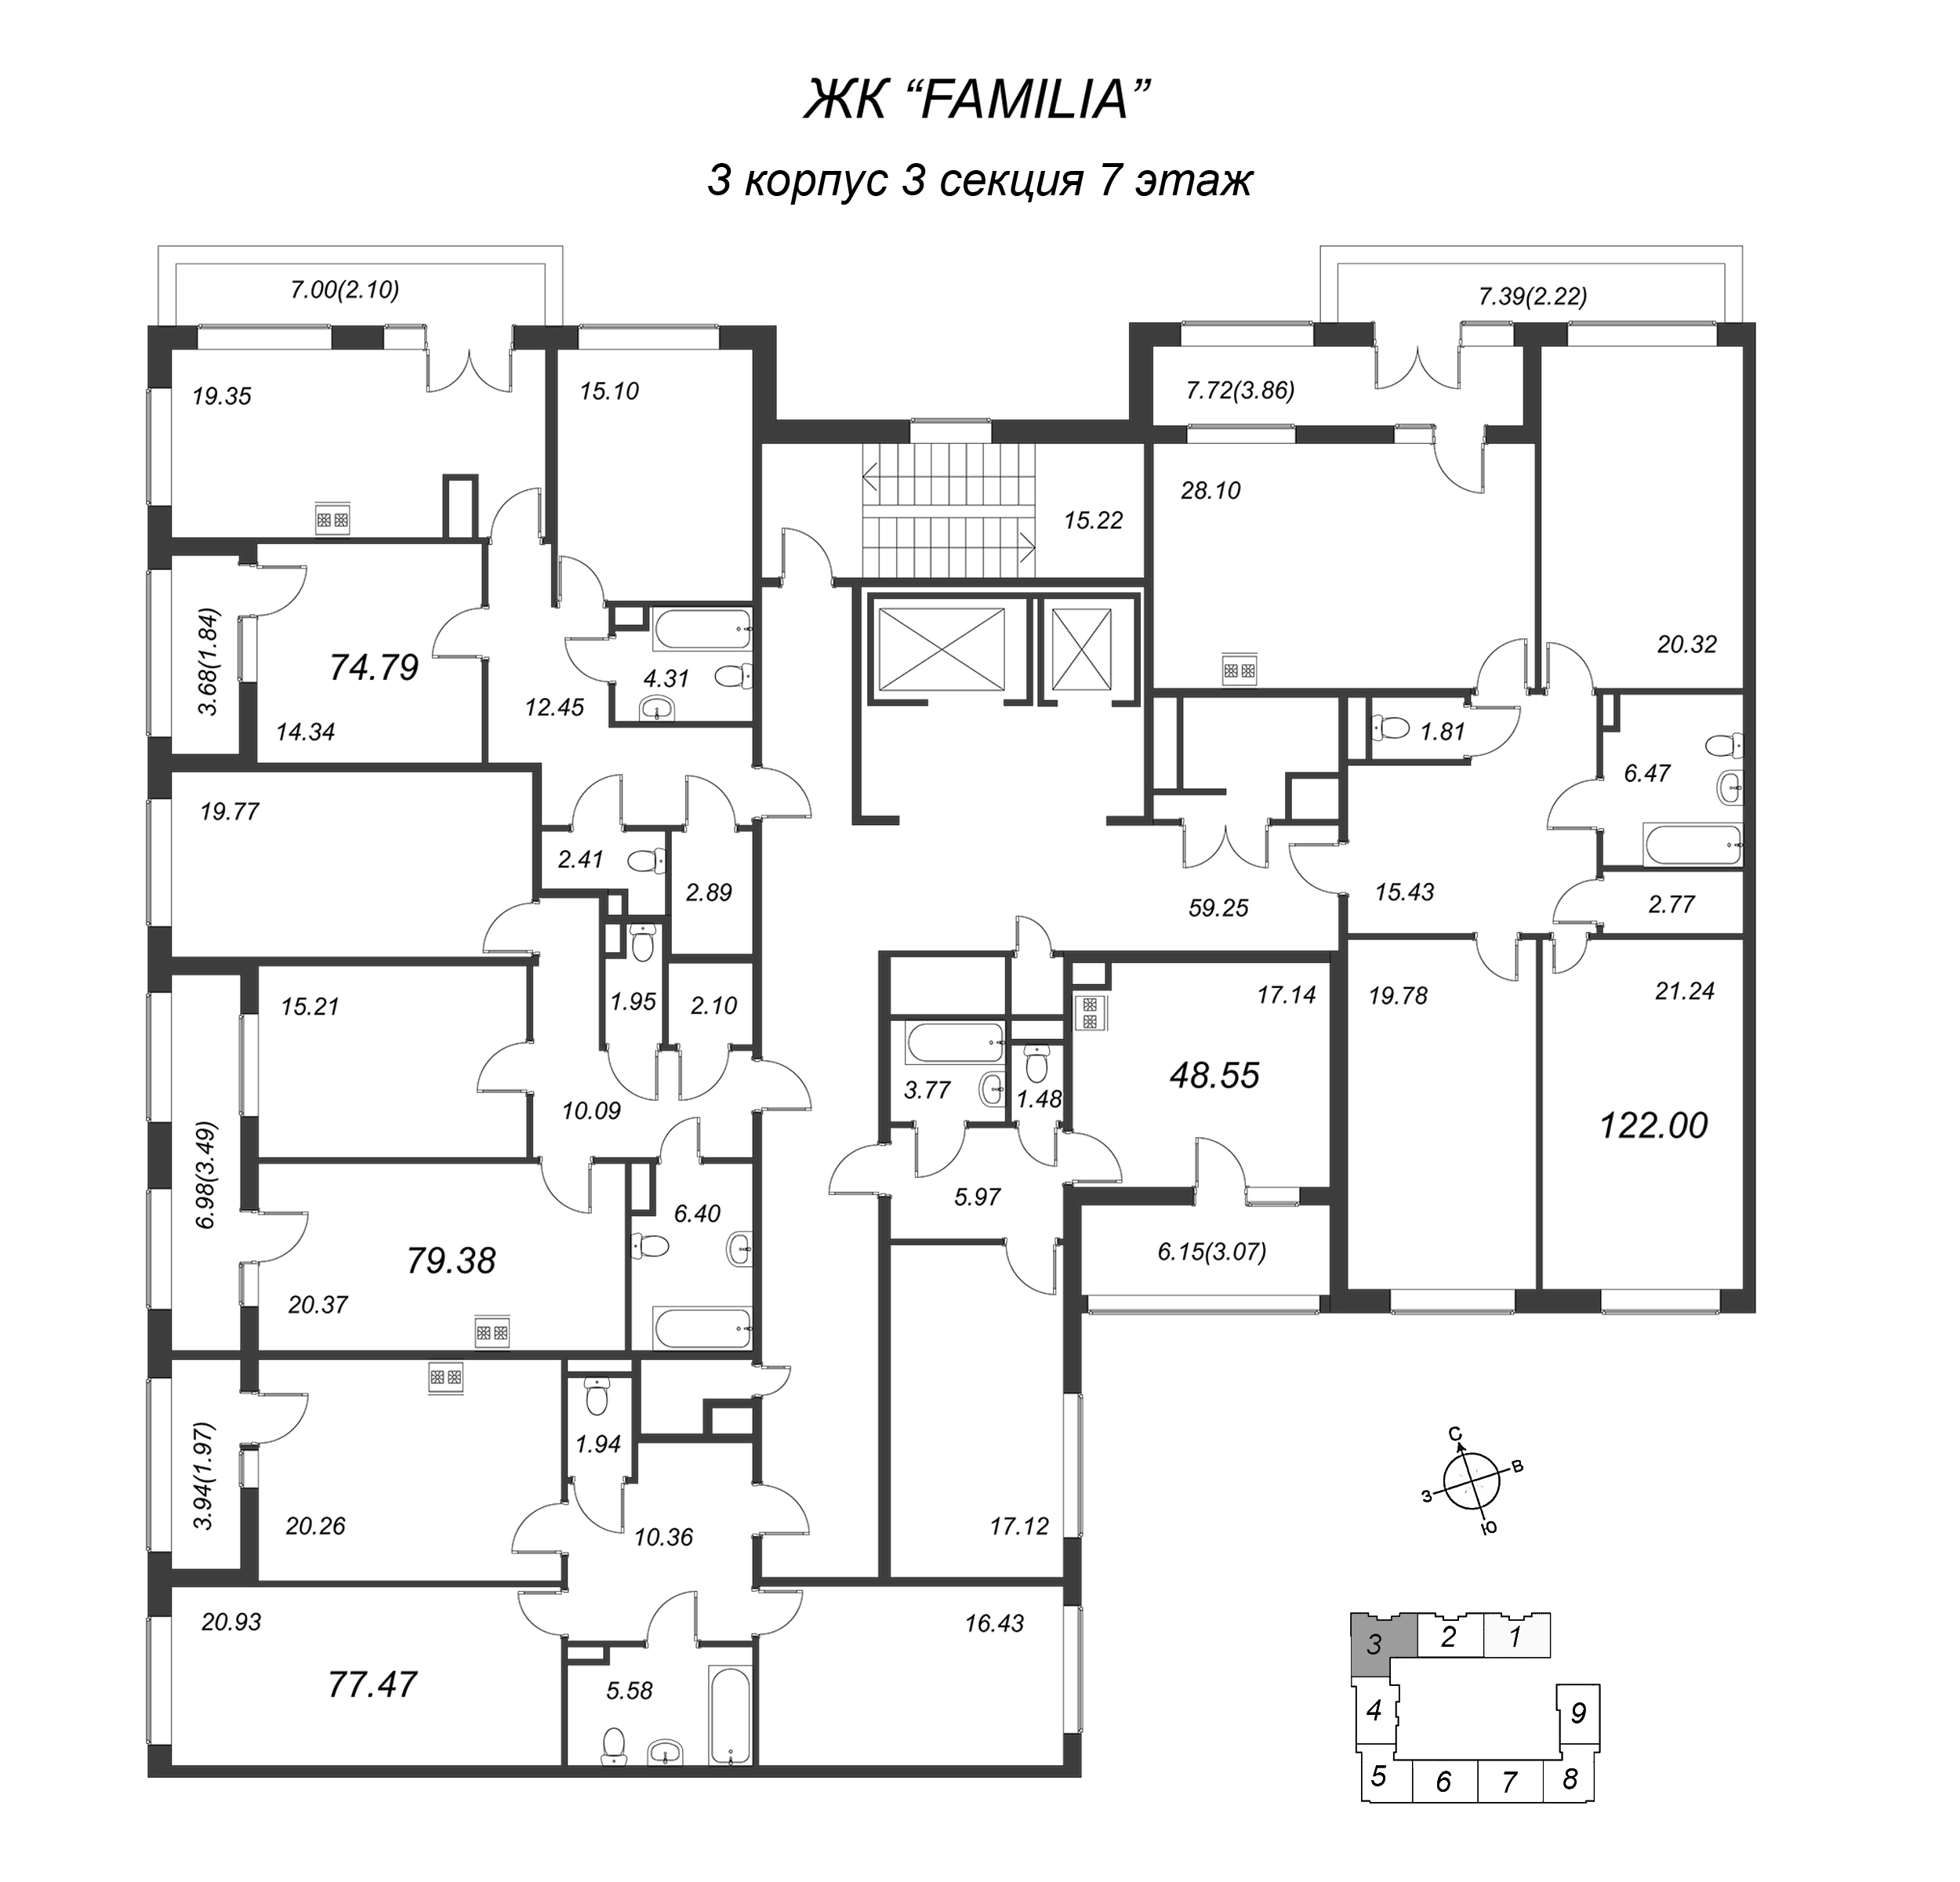 2-комнатная (Евро) квартира, 48.8 м² в ЖК "FAMILIA" - планировка этажа